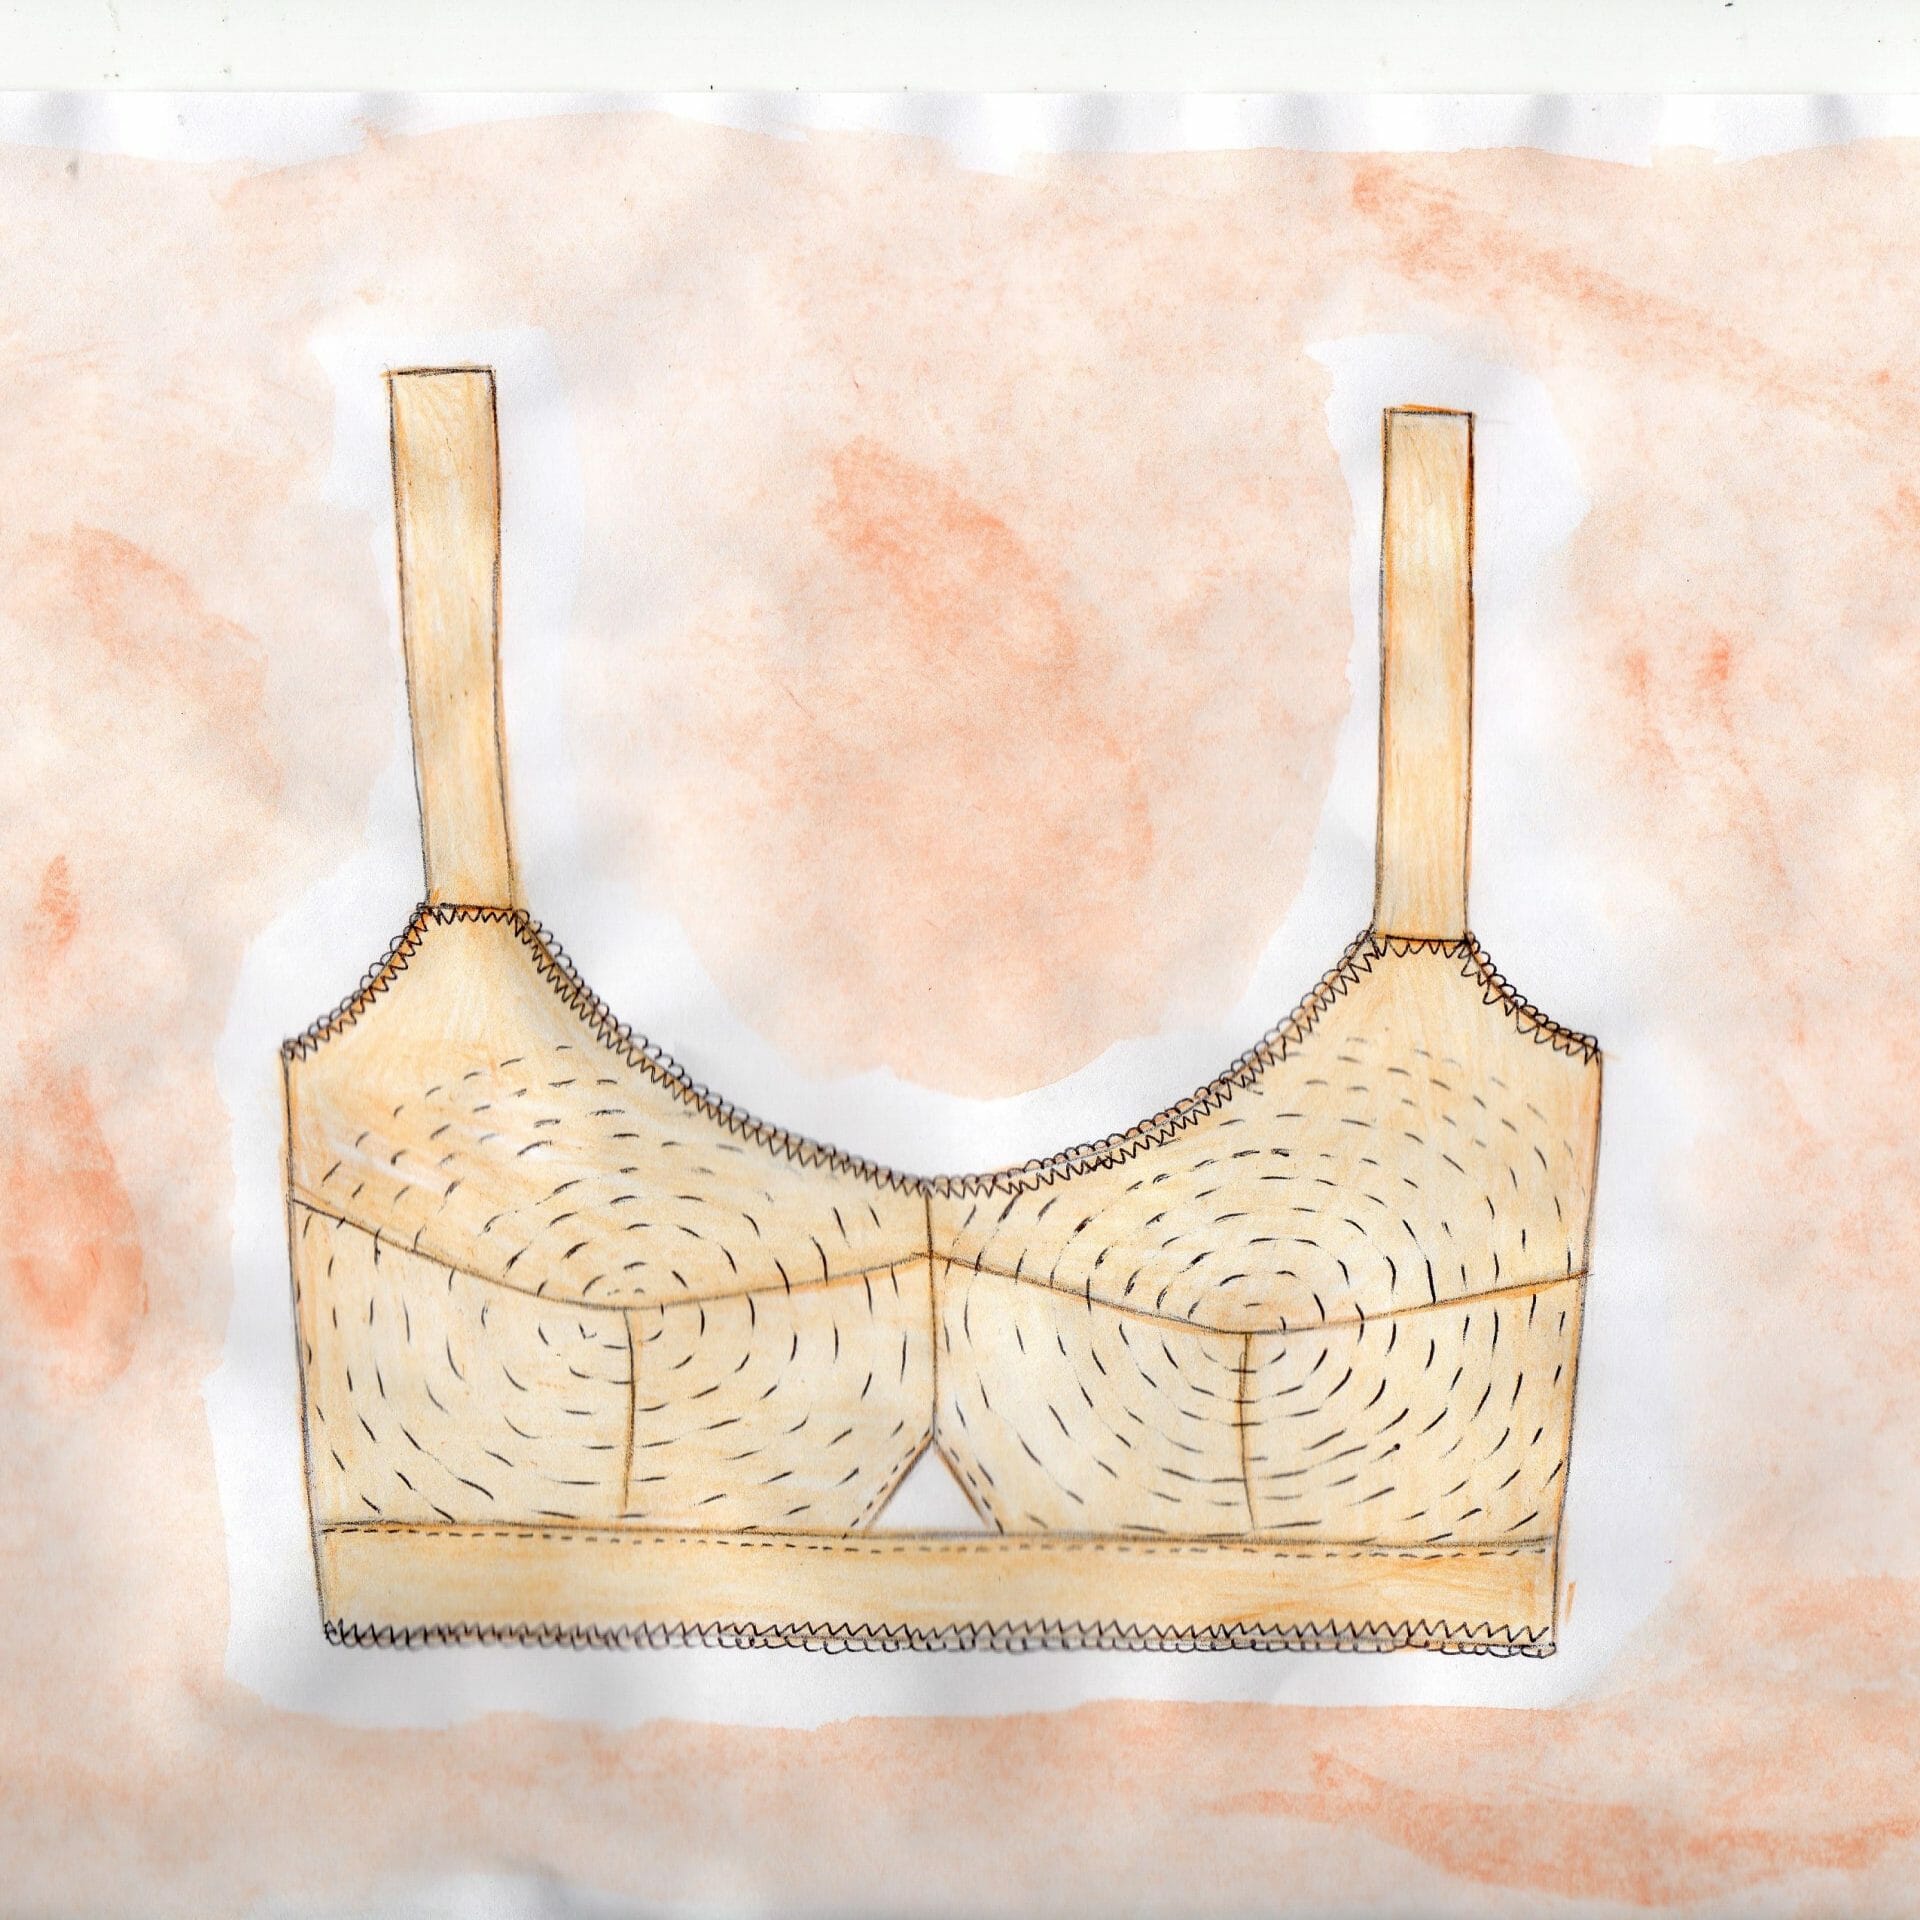 1950s bullet bra pattern, Pin up girl bra pattern, Custom